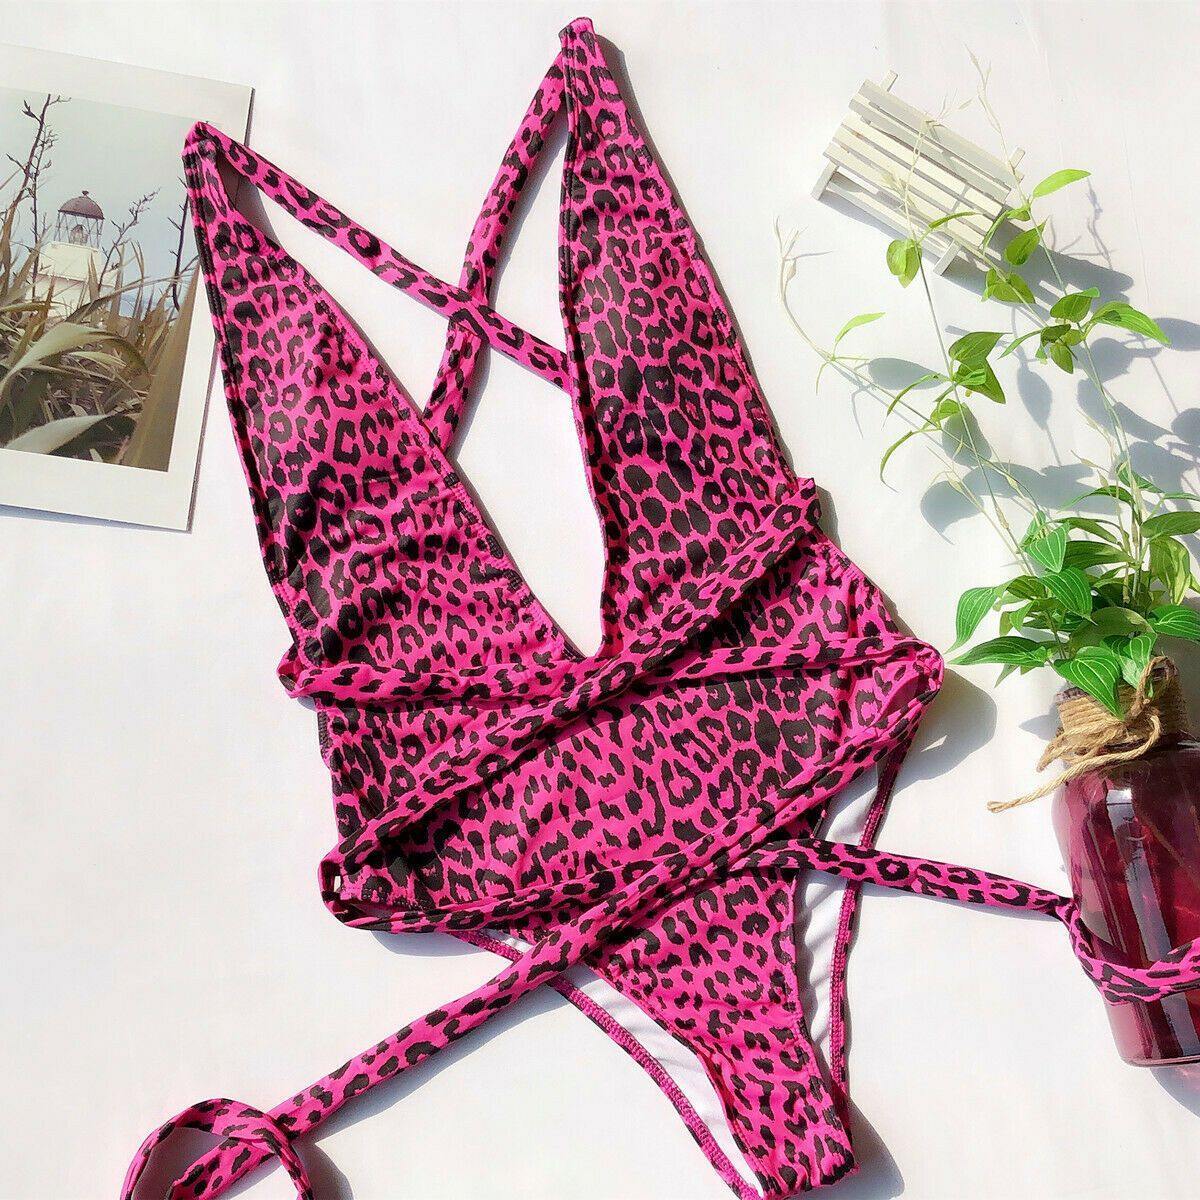 Leopard Bangdage One Piece Swimsuit-Women Swimwear-Leopard/Hot pink-M-Free Shipping Leatheretro